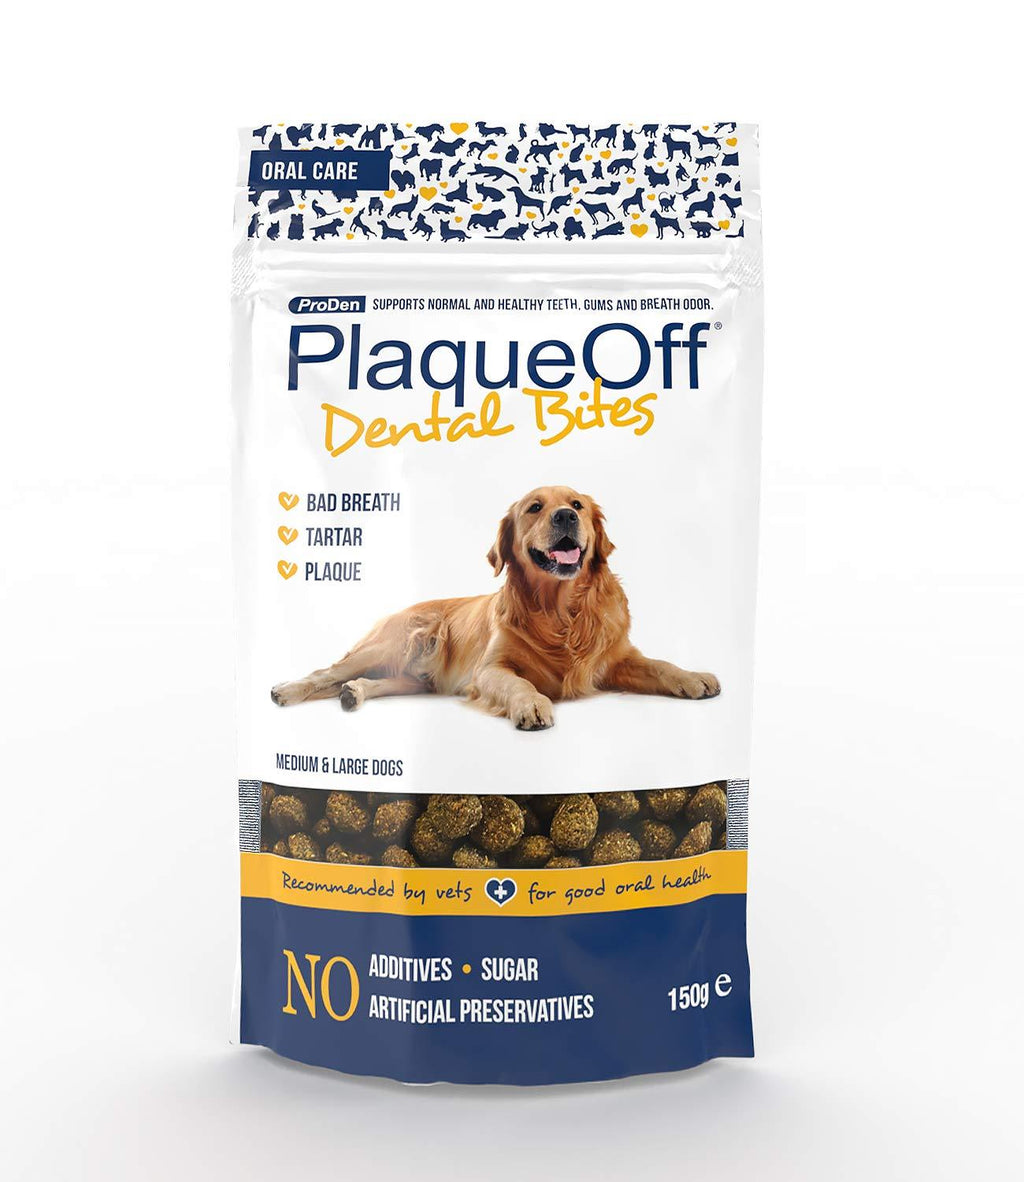 ProDen PlaqueOff Dental Bites 150 g, for Dogs Over 10 kg, Bad Breath, Plaque, Tartar 150 g (Pack of 1) - PawsPlanet Australia